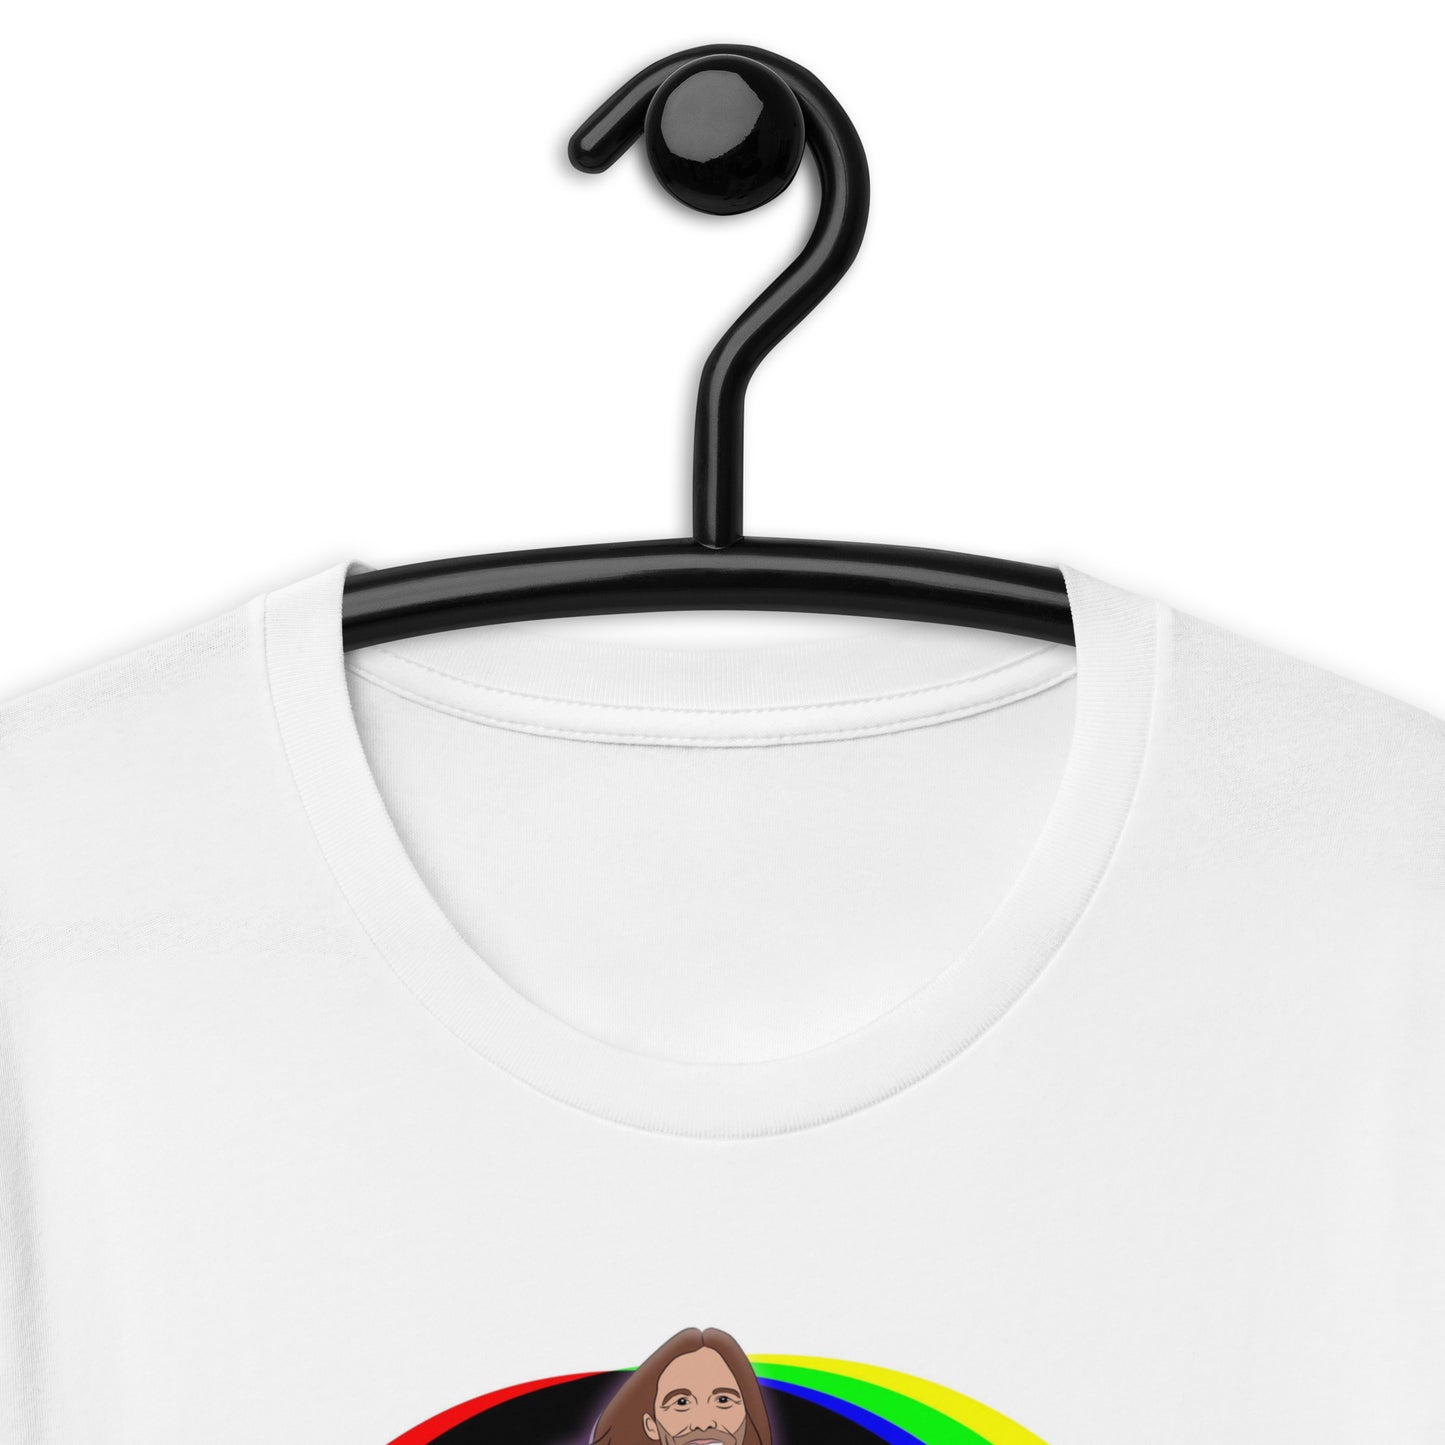 Queer Eye Unisex t-shirt